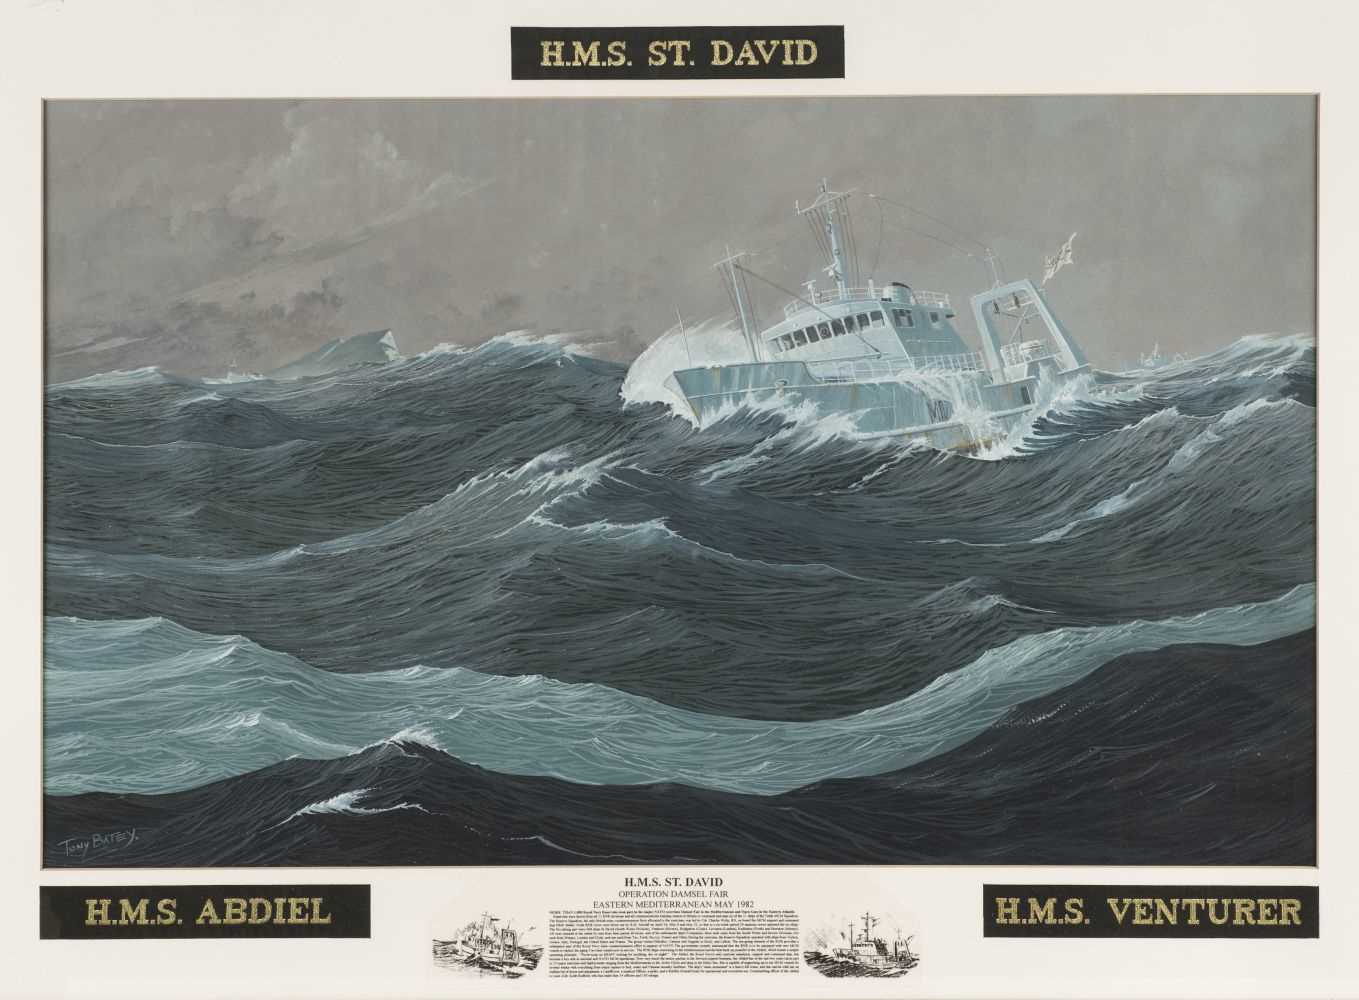 Lot 98 - Batey (Tony). HMS St. David, watercolour and gouache